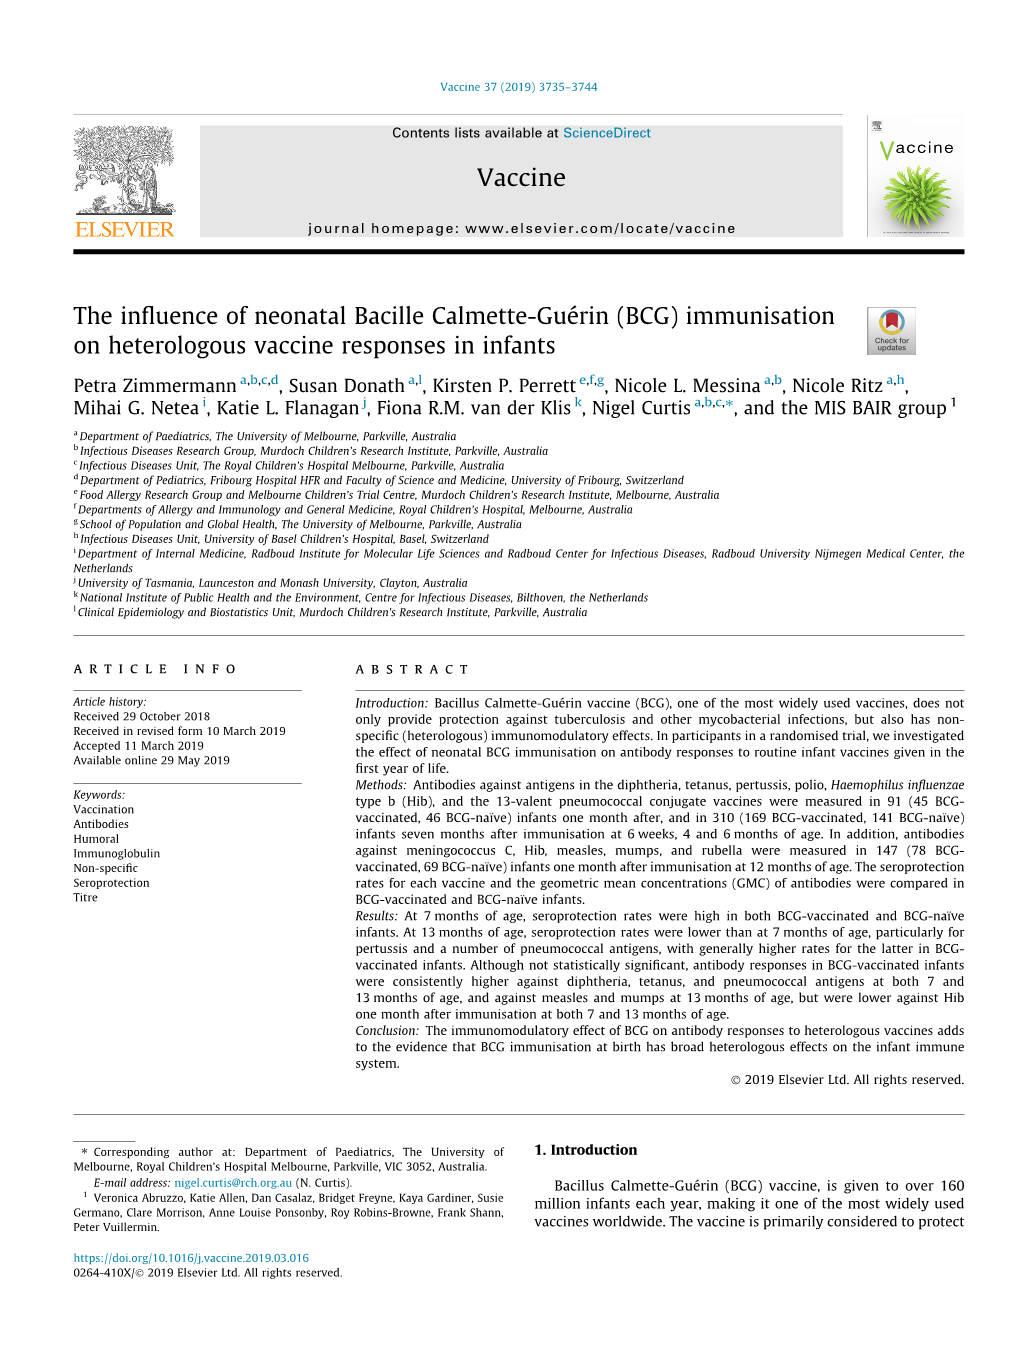 The Influence of Neonatal Bacille Calmette-Guã©Rin (BCG